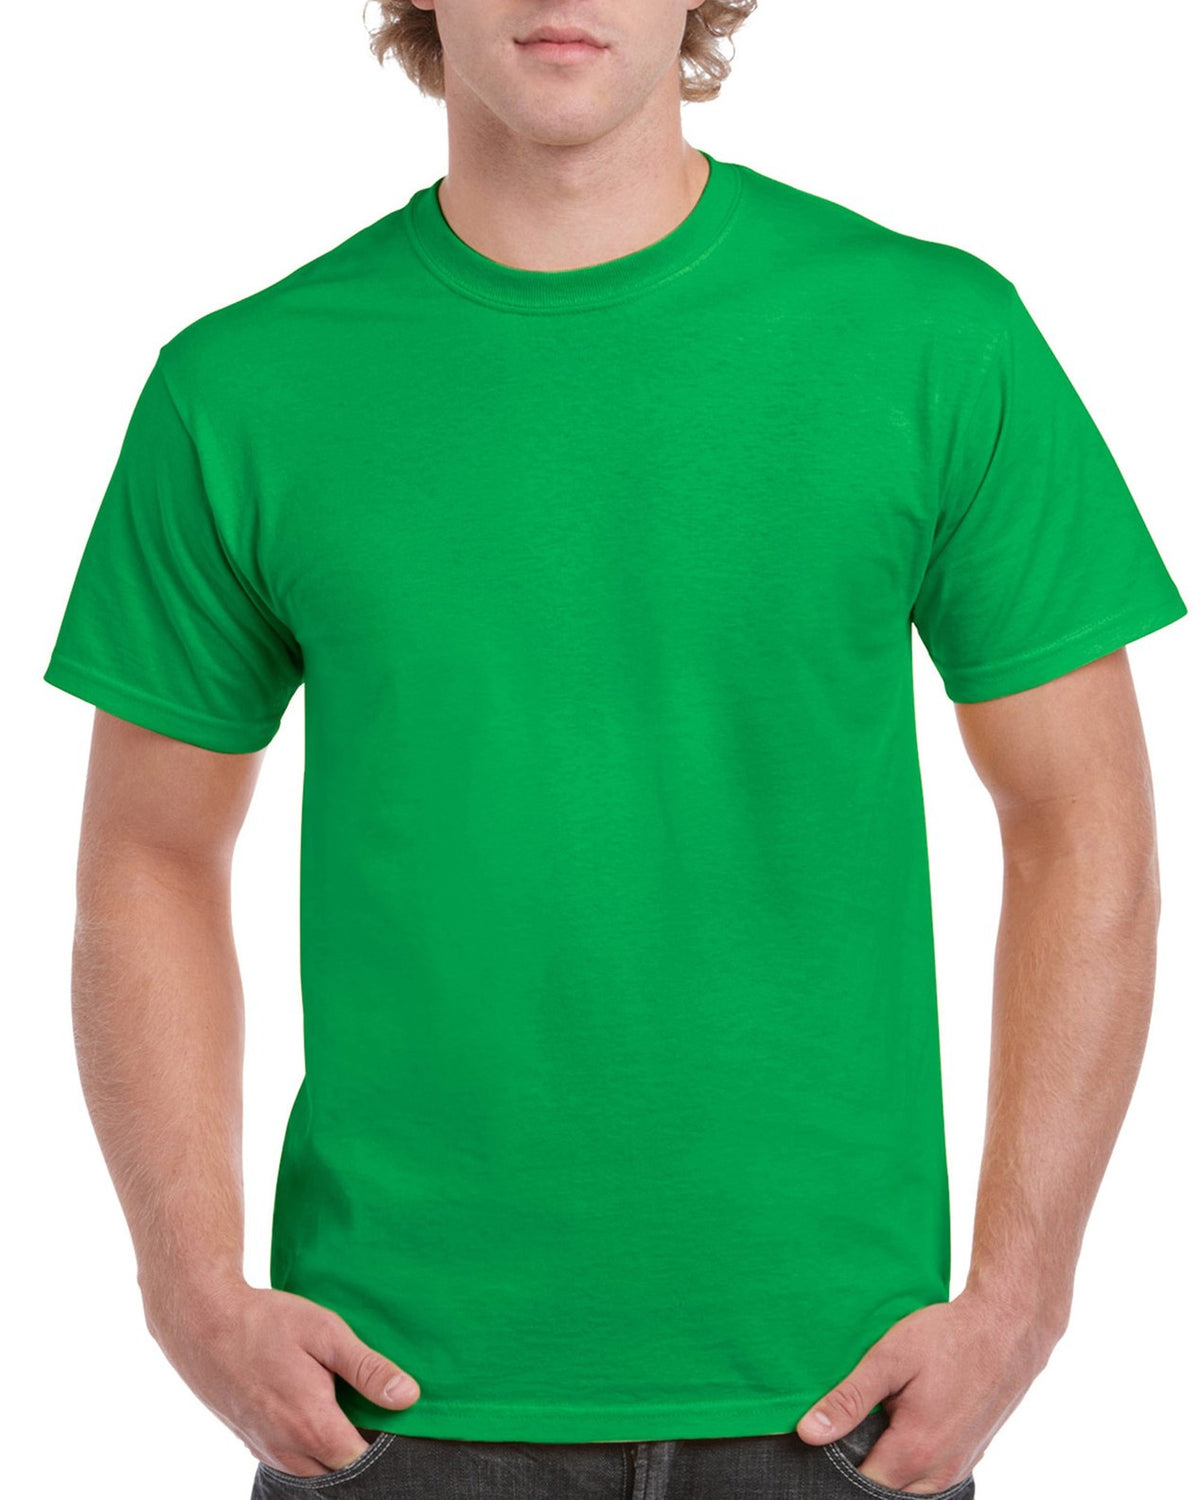 Gildan Heavy Cotton G5000 Adult T-Shirt (2XL)